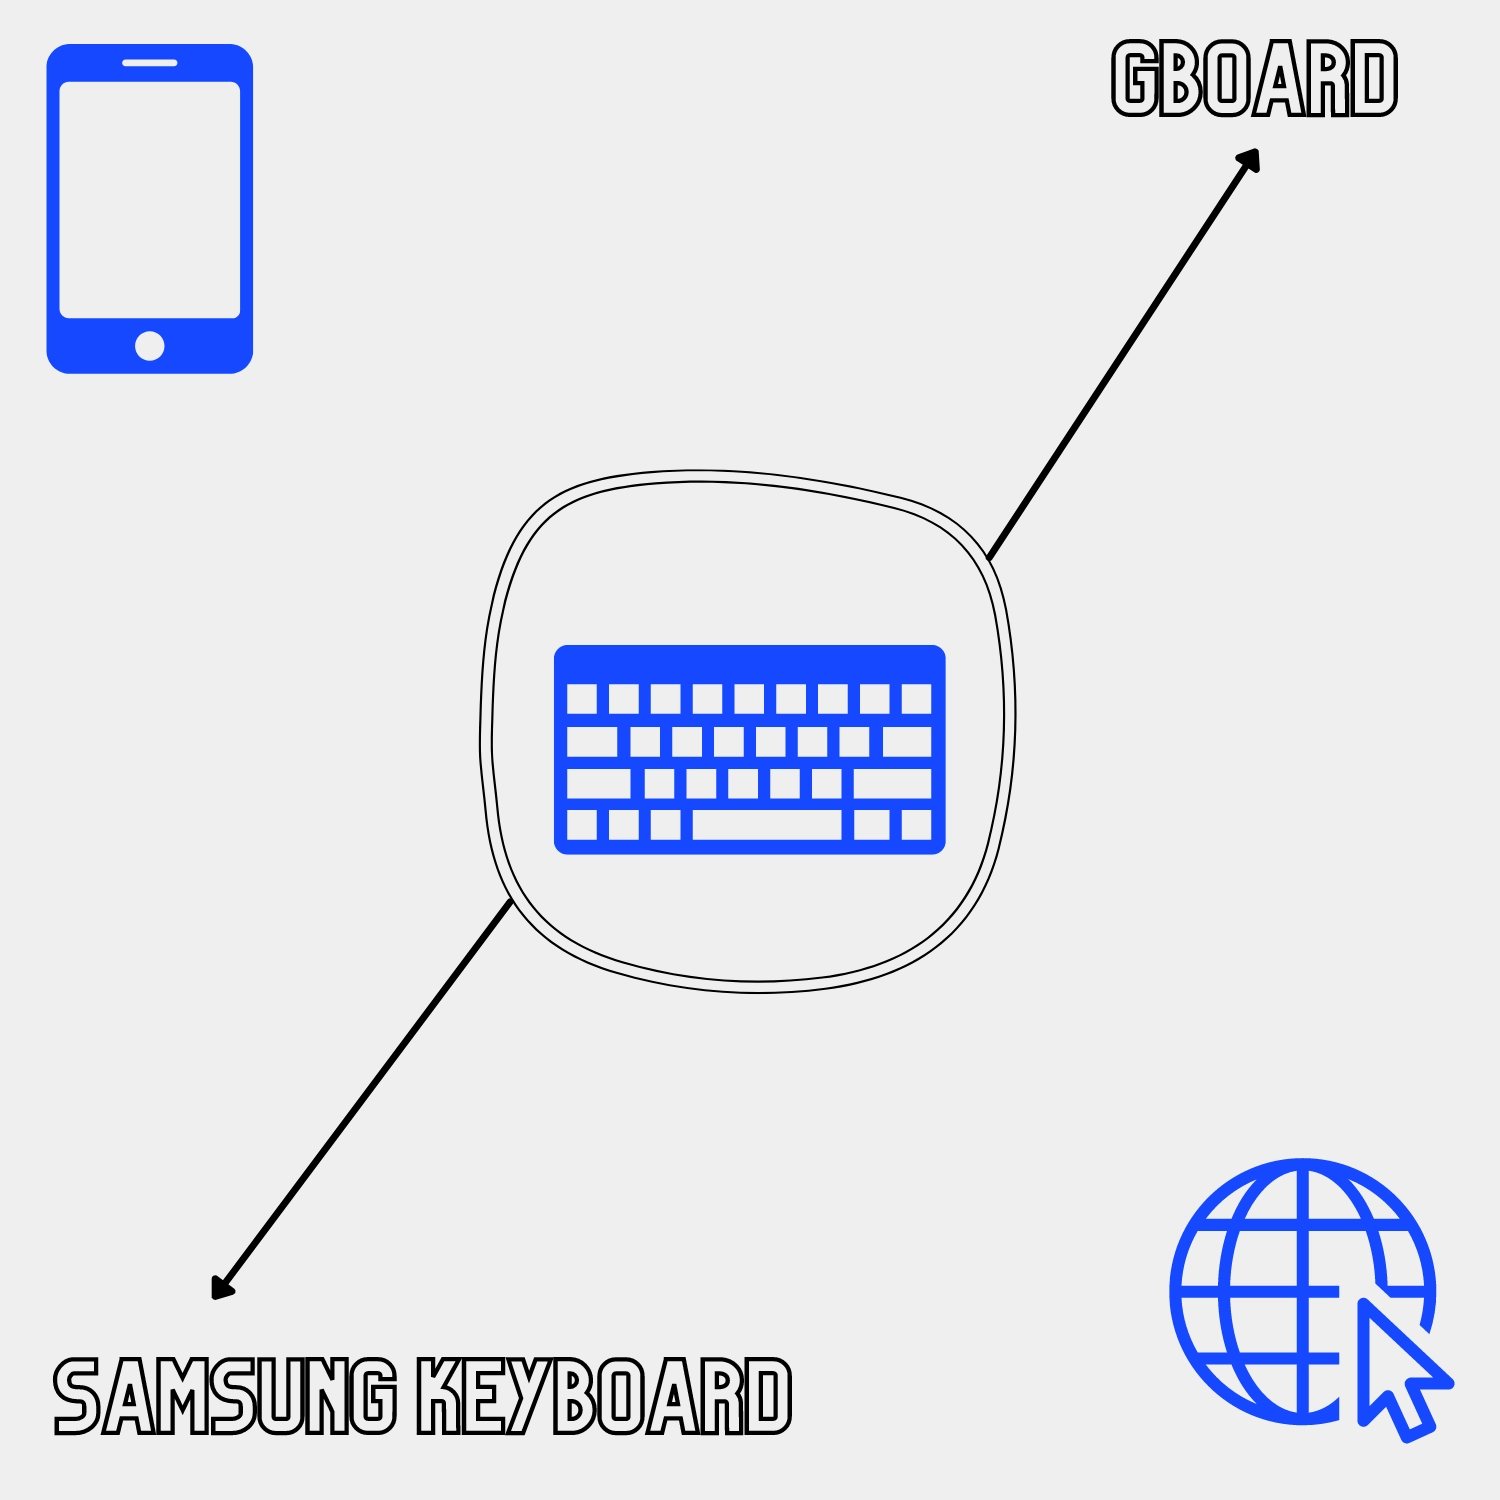 Gboard vs Samsung Keyboard